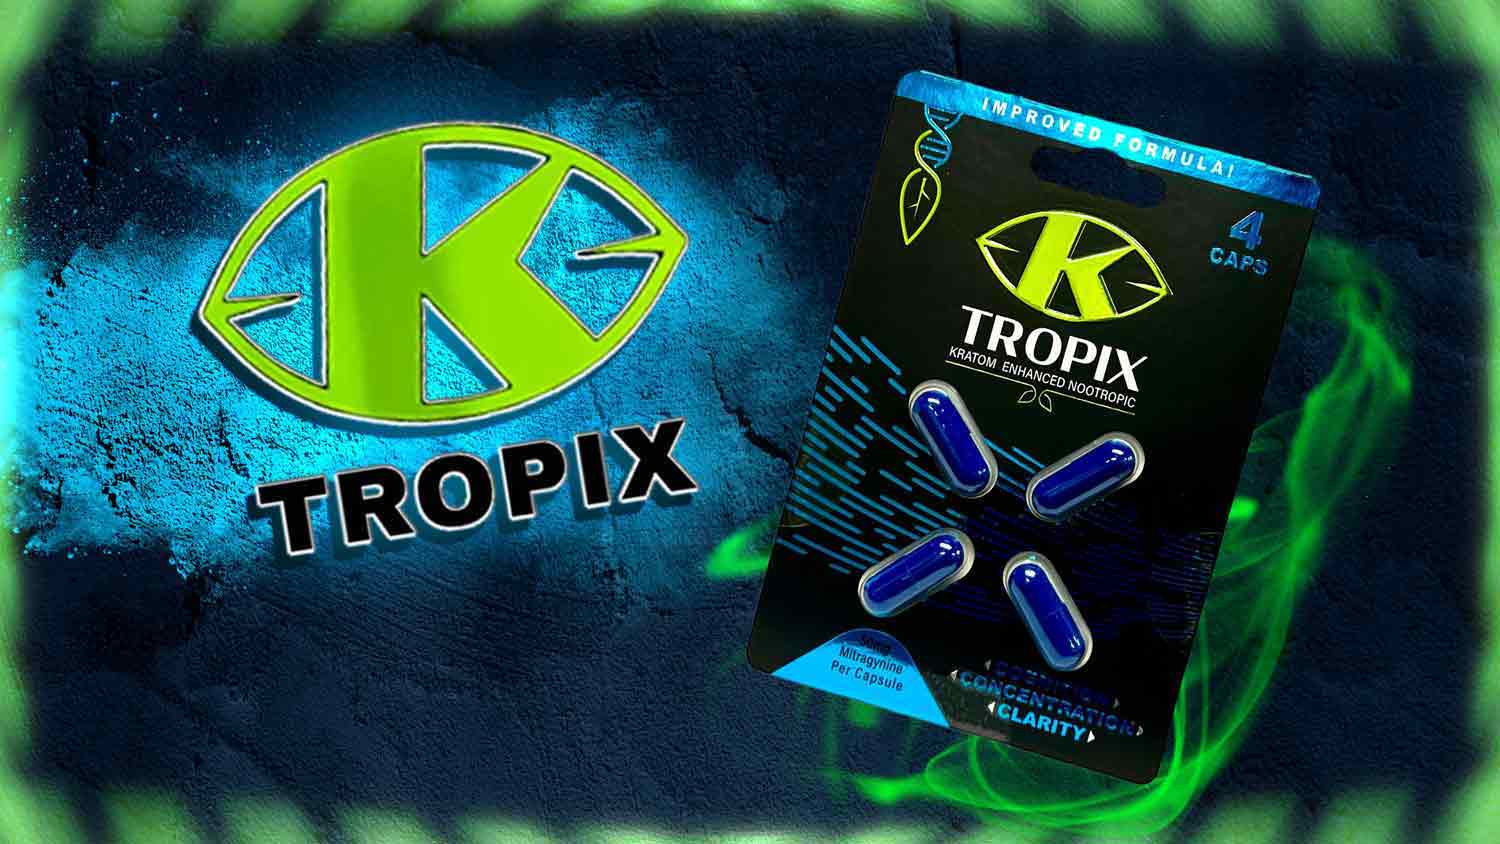 K Tropix Kratom Enhanced Nootropic Capsules 4ct